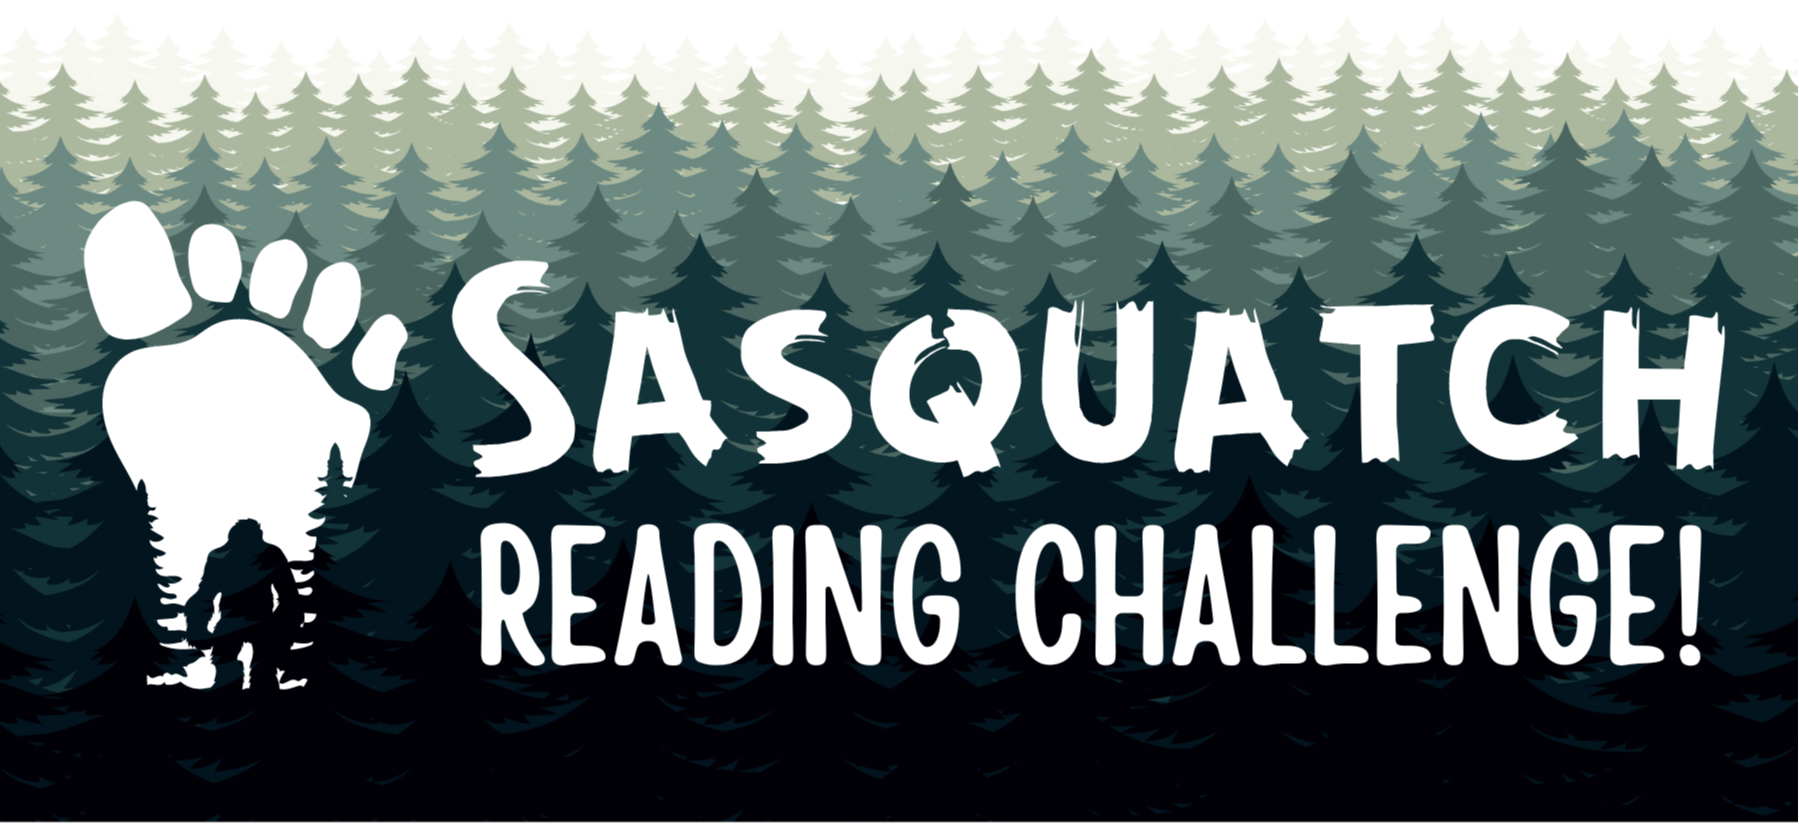 Sasquatch Reading Challenge, Green Pine Trees, Sasquatch, Footprint